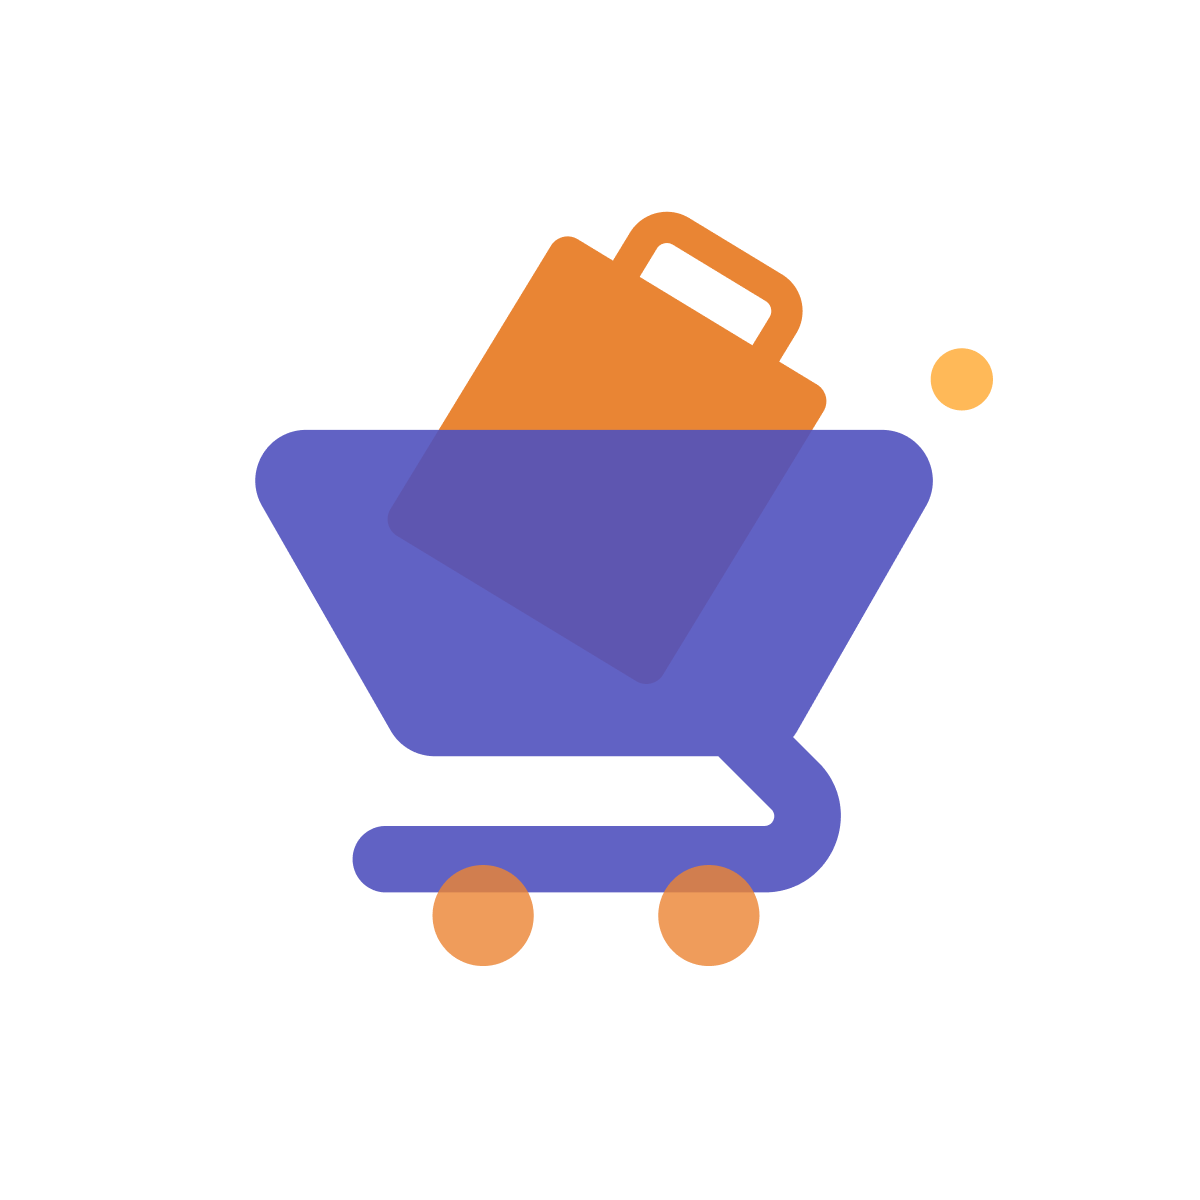 Hire Shopify Experts to integrate GR‑StickyAddToCart app into a Shopify store